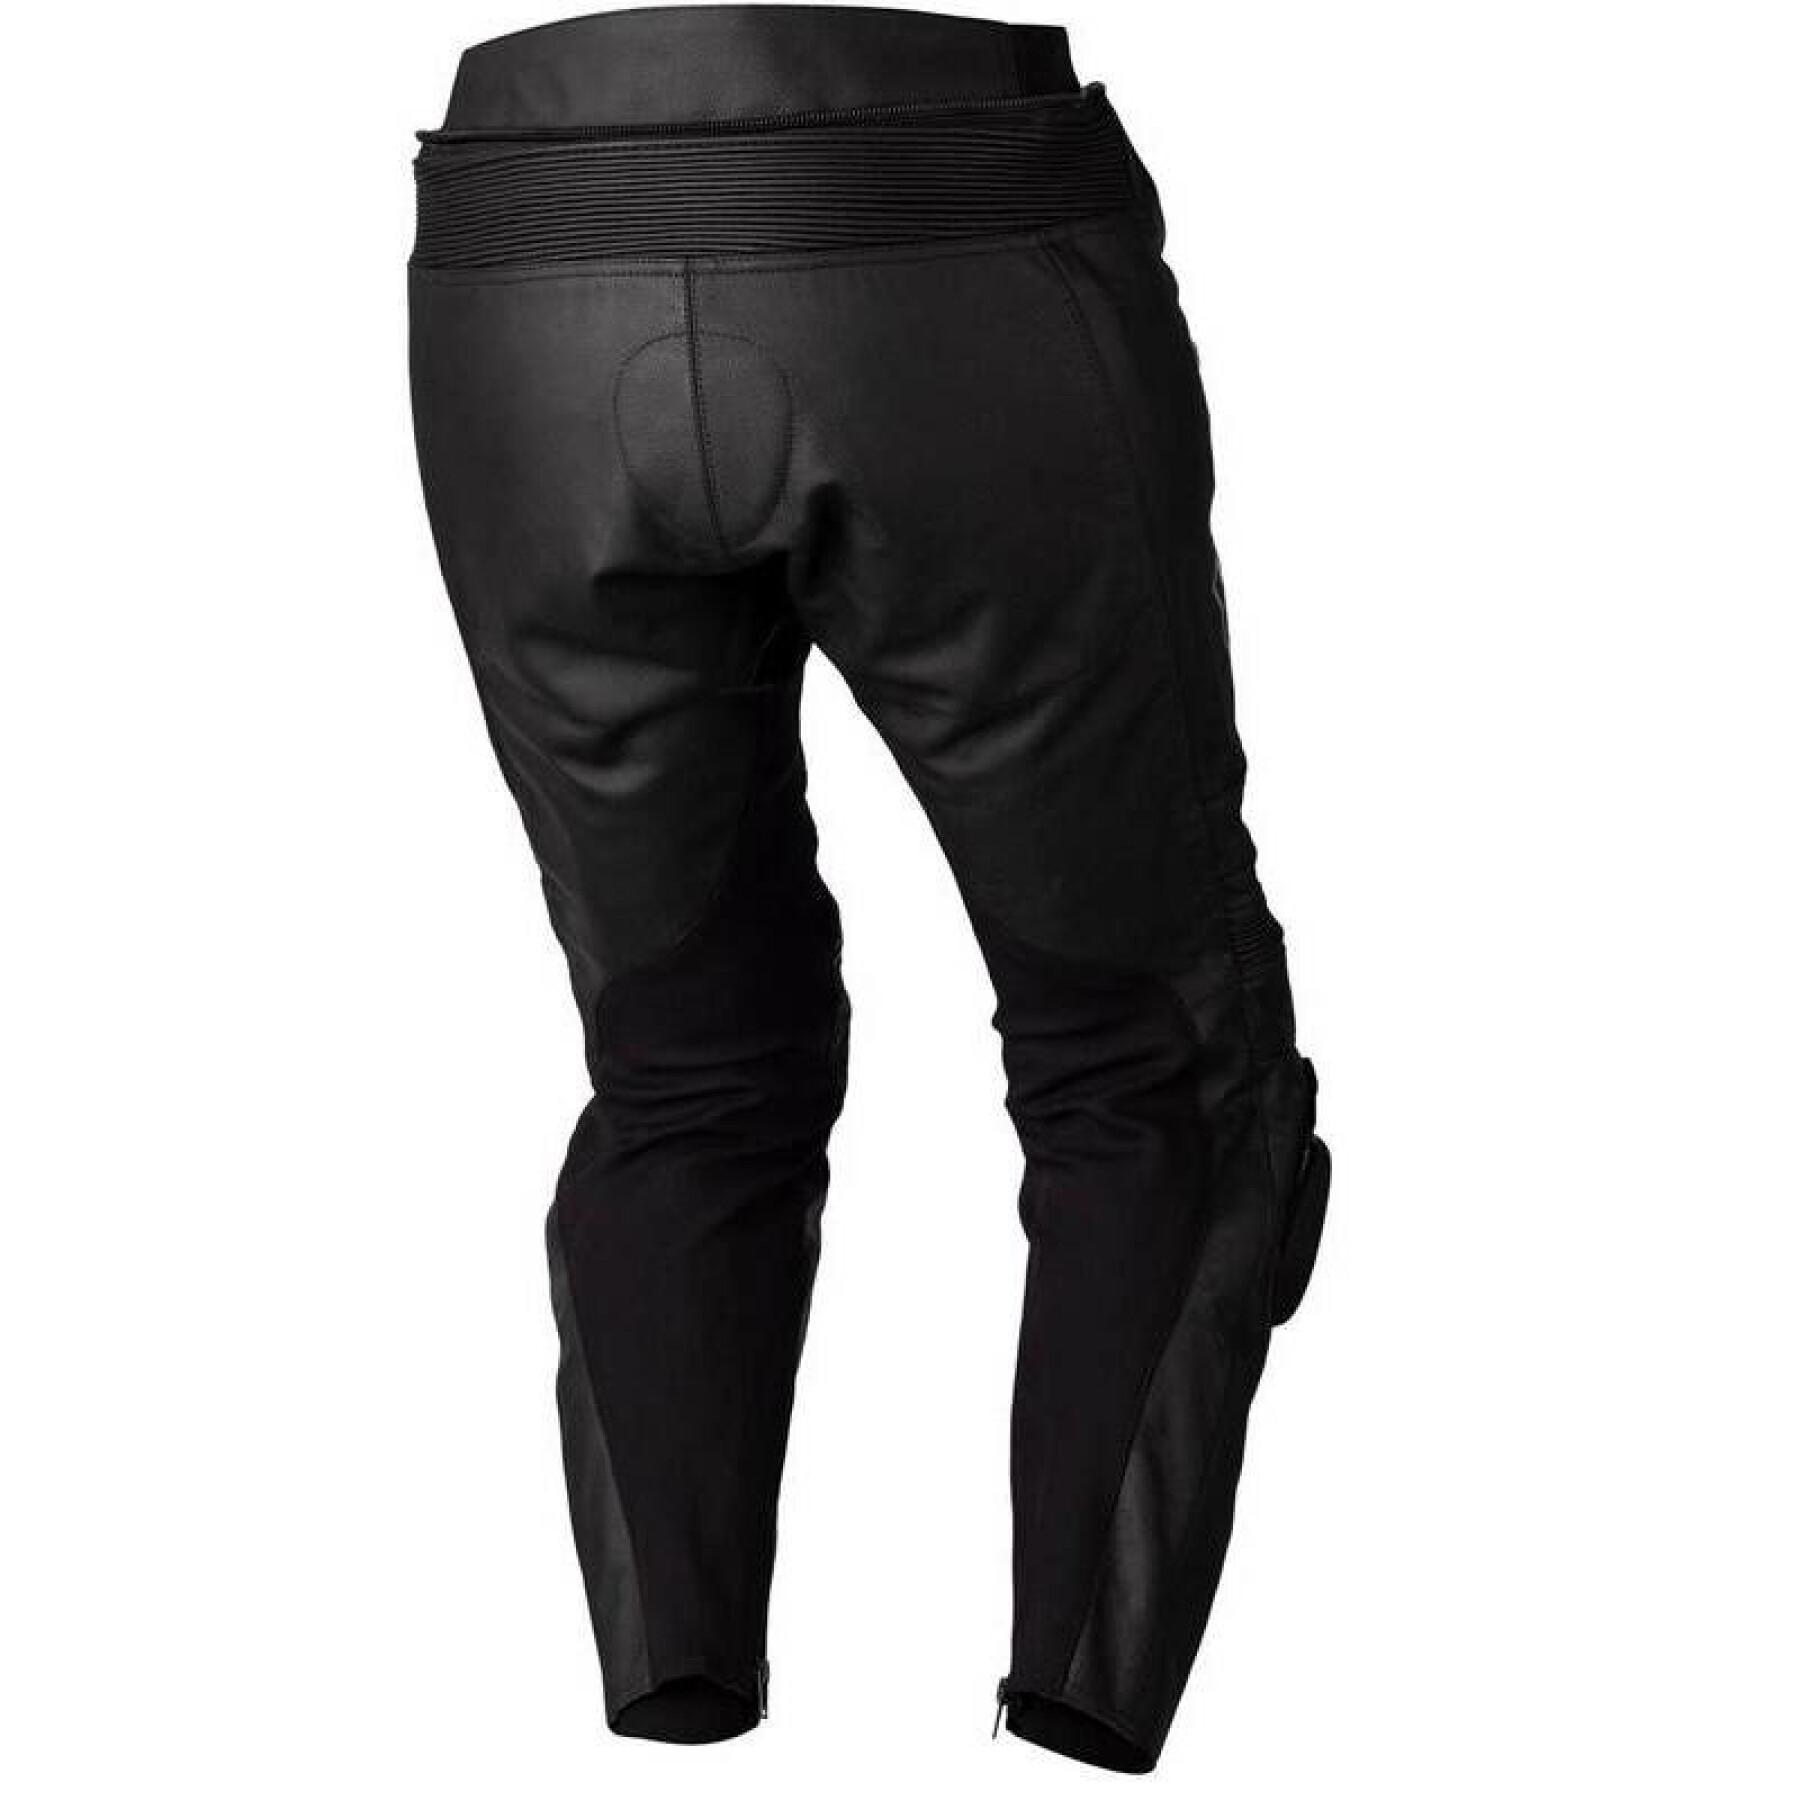 Pantaloni da moto in pelle RST S1 CE